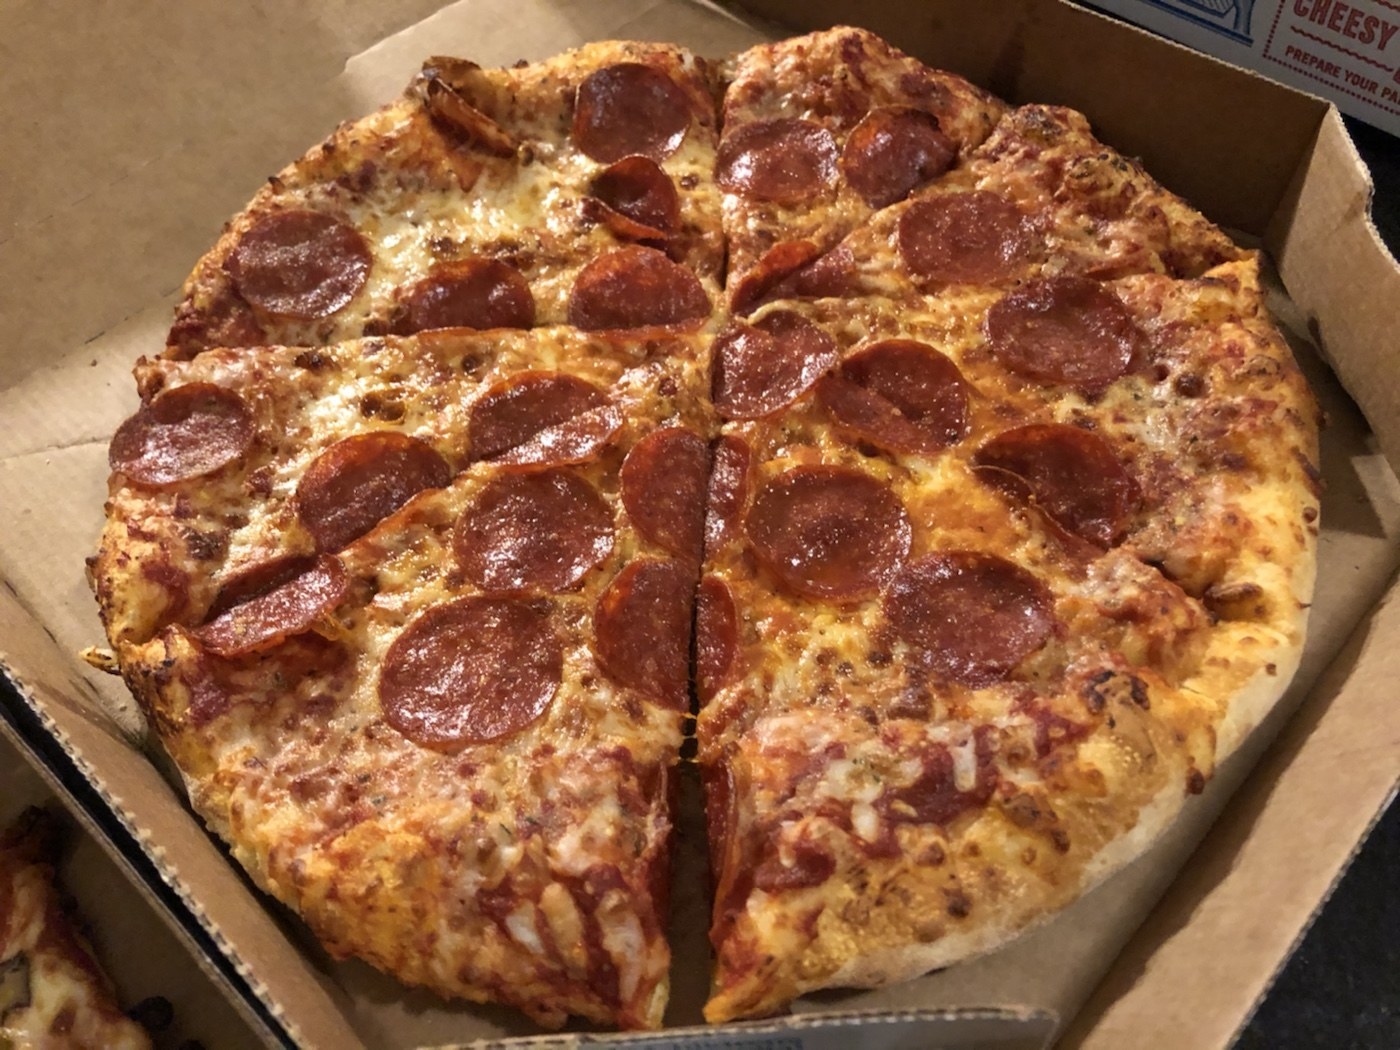 A medium-sized pepperoni pizza.